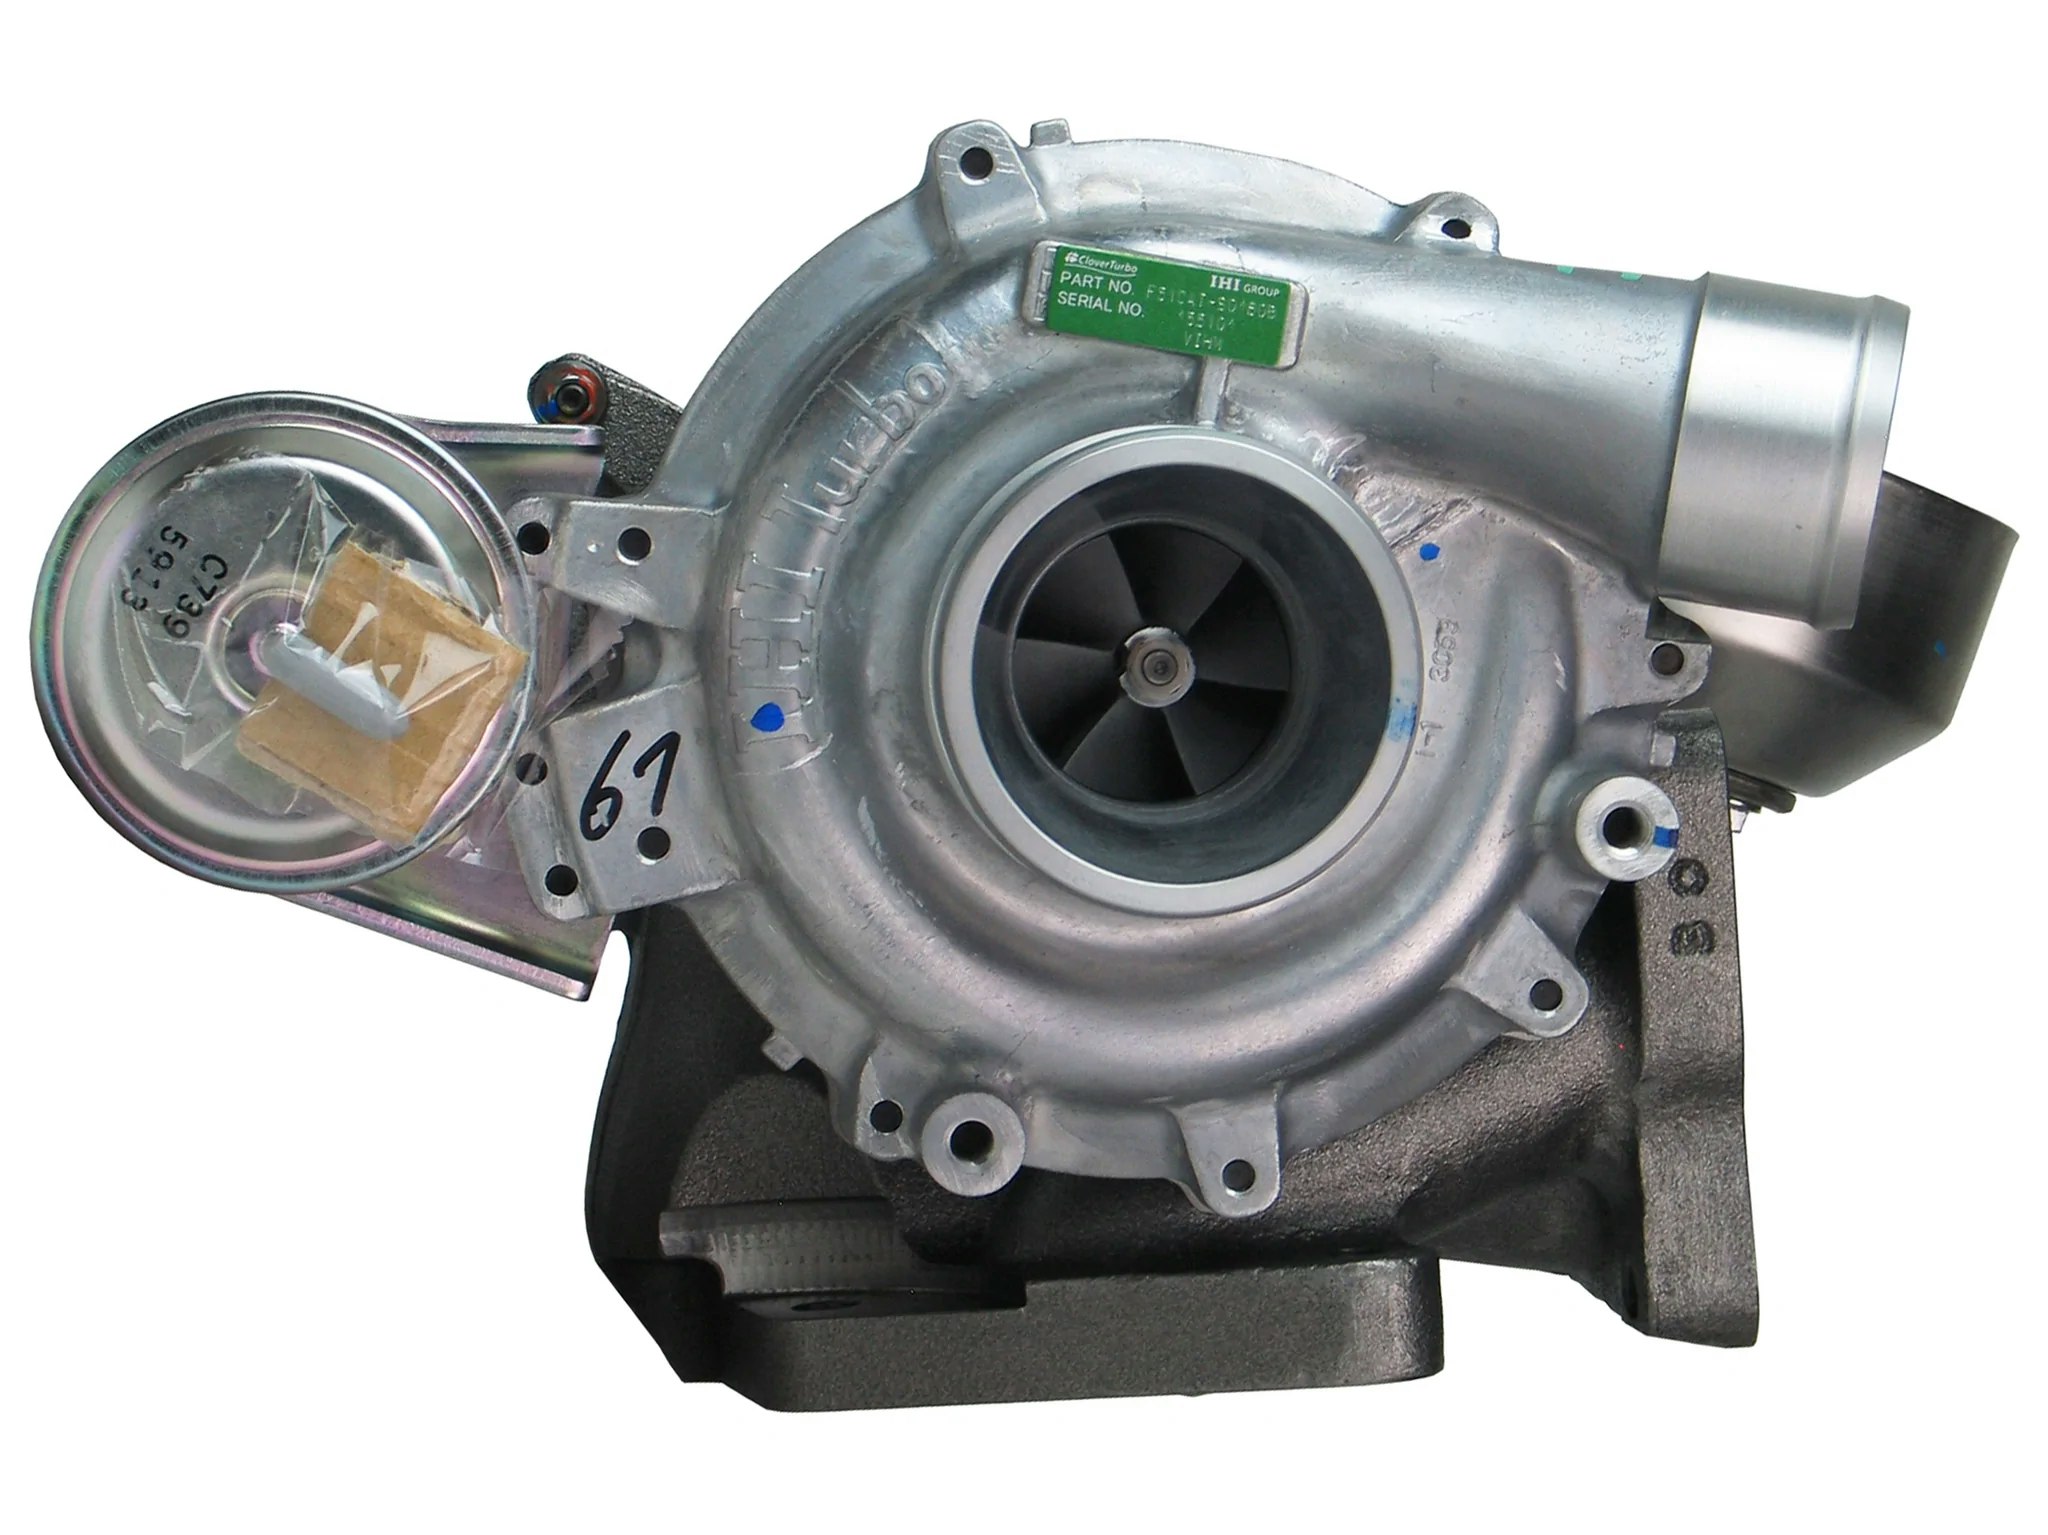 VIHM IHI ISUZU D-Max Fabriksny original turbo OEM : 8981506883 Motor : 4JK1  ( Storsäljare )